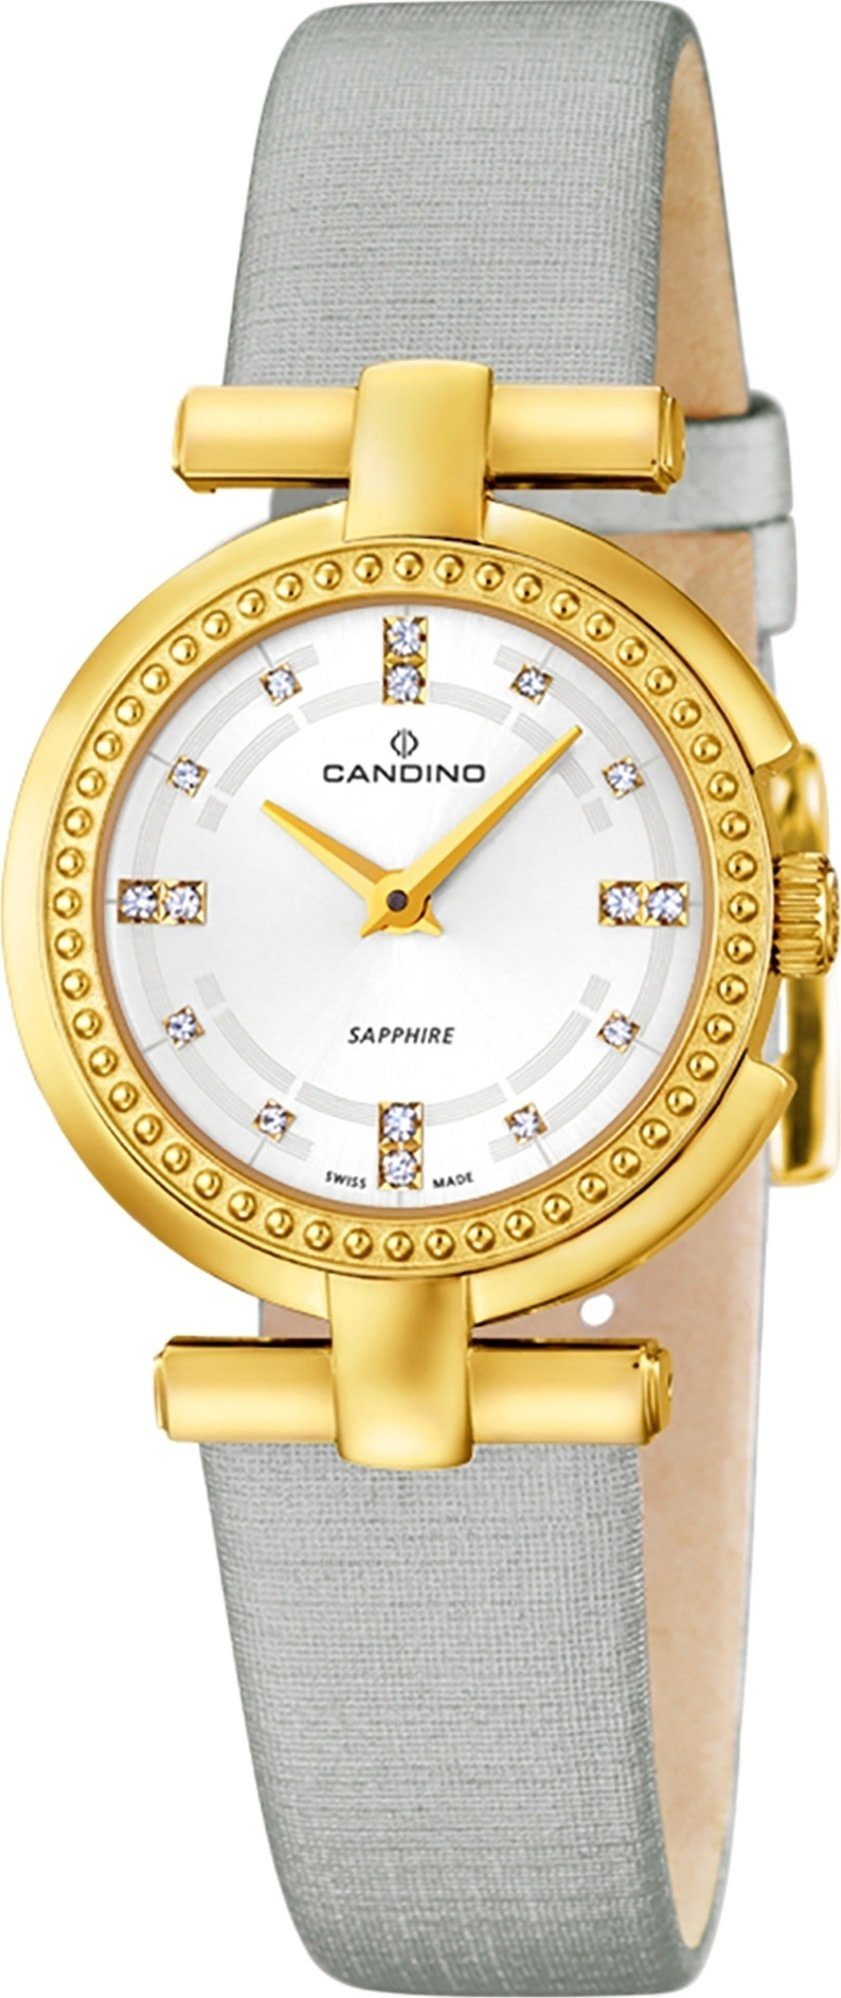 Candino Quarzuhr Candino Damen Fashion Leder/Textilarmband rund, grau, C4561/1, Armbanduhr Uhr Damen Analog